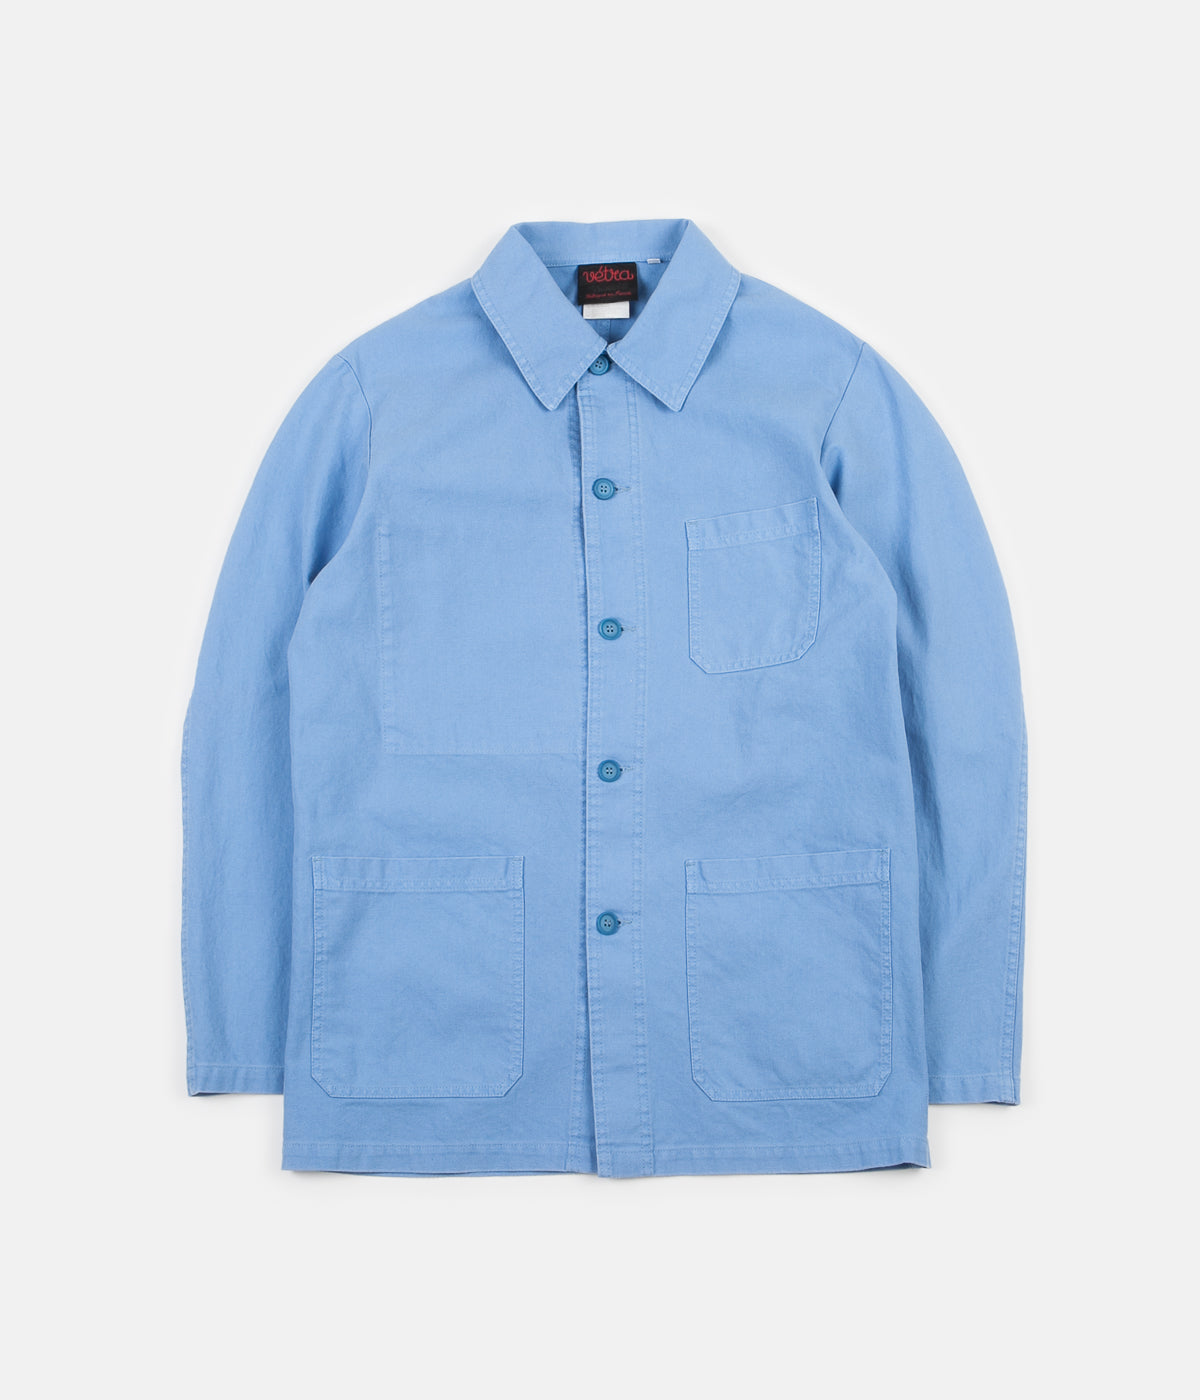 Vetra No.4 Workwear Jacket - Lavender | Flatspot